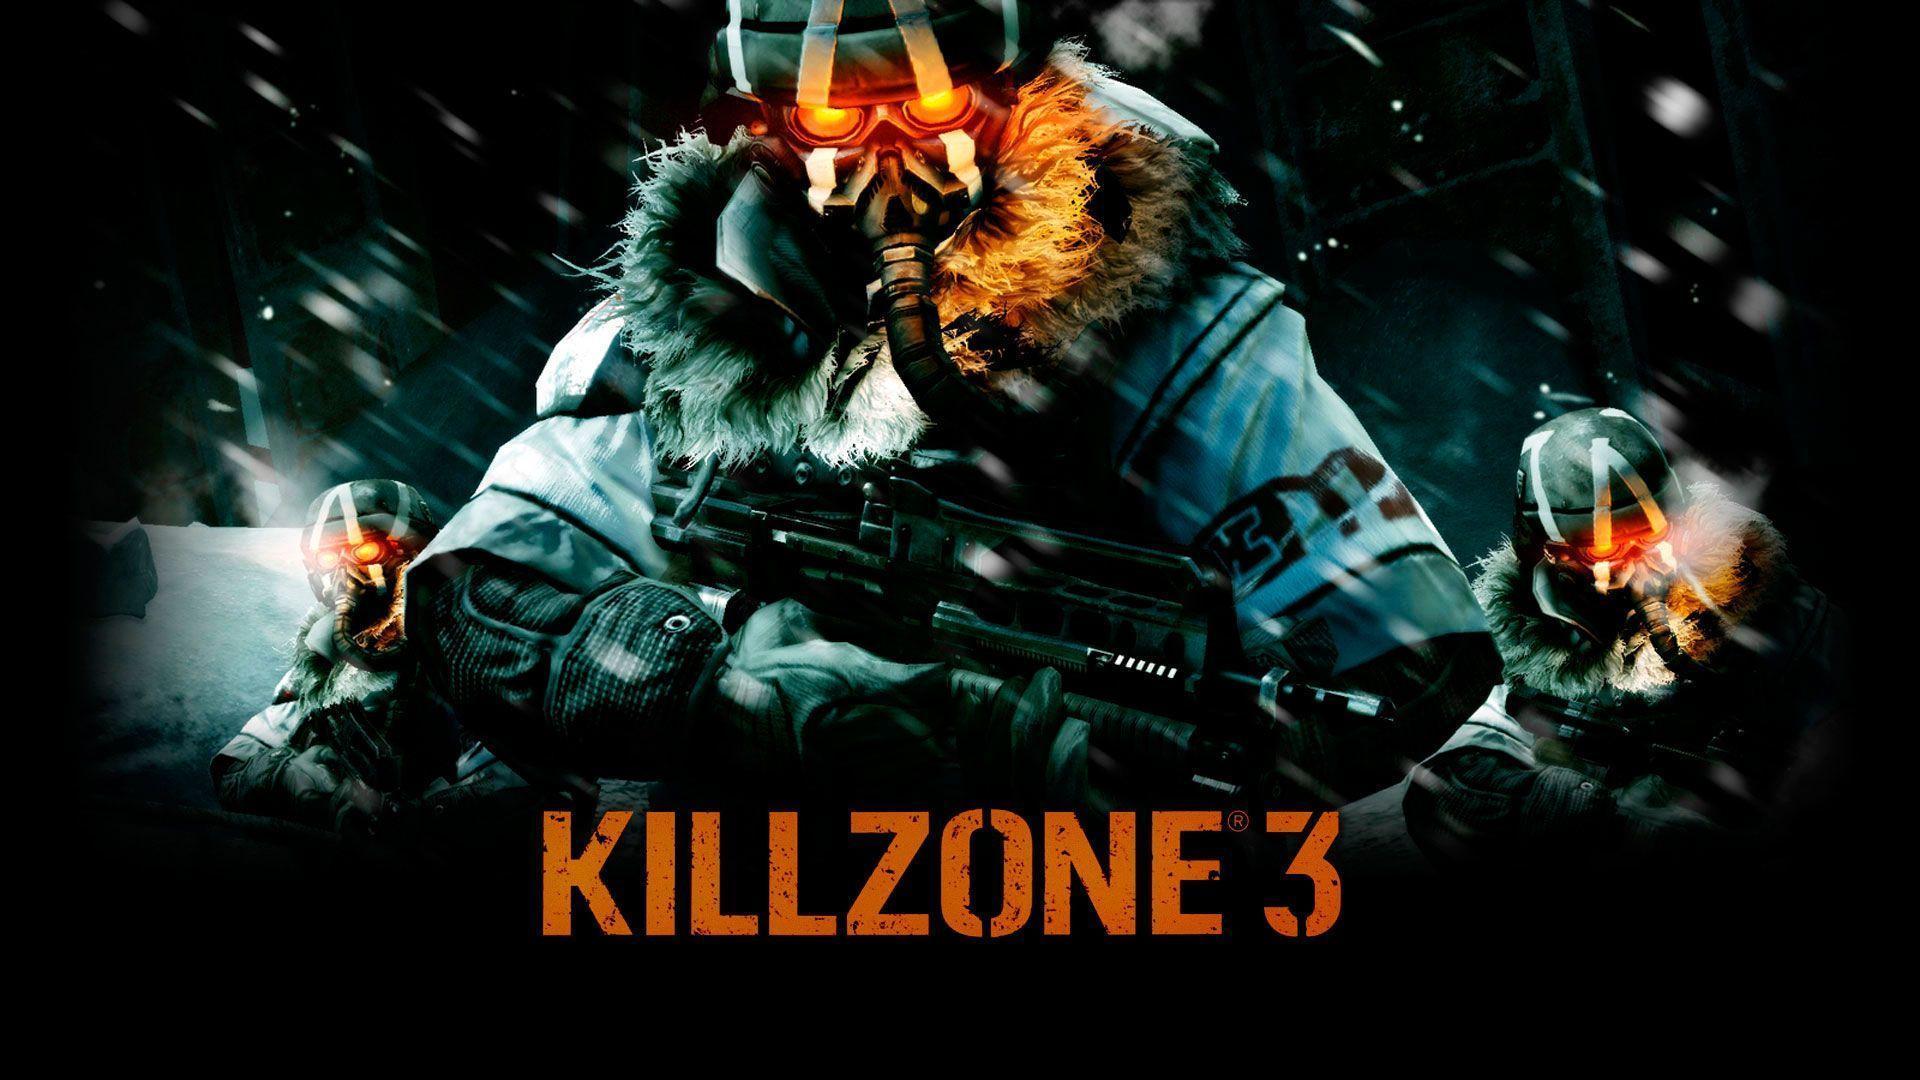 Video Game Killzone HD Wallpaper